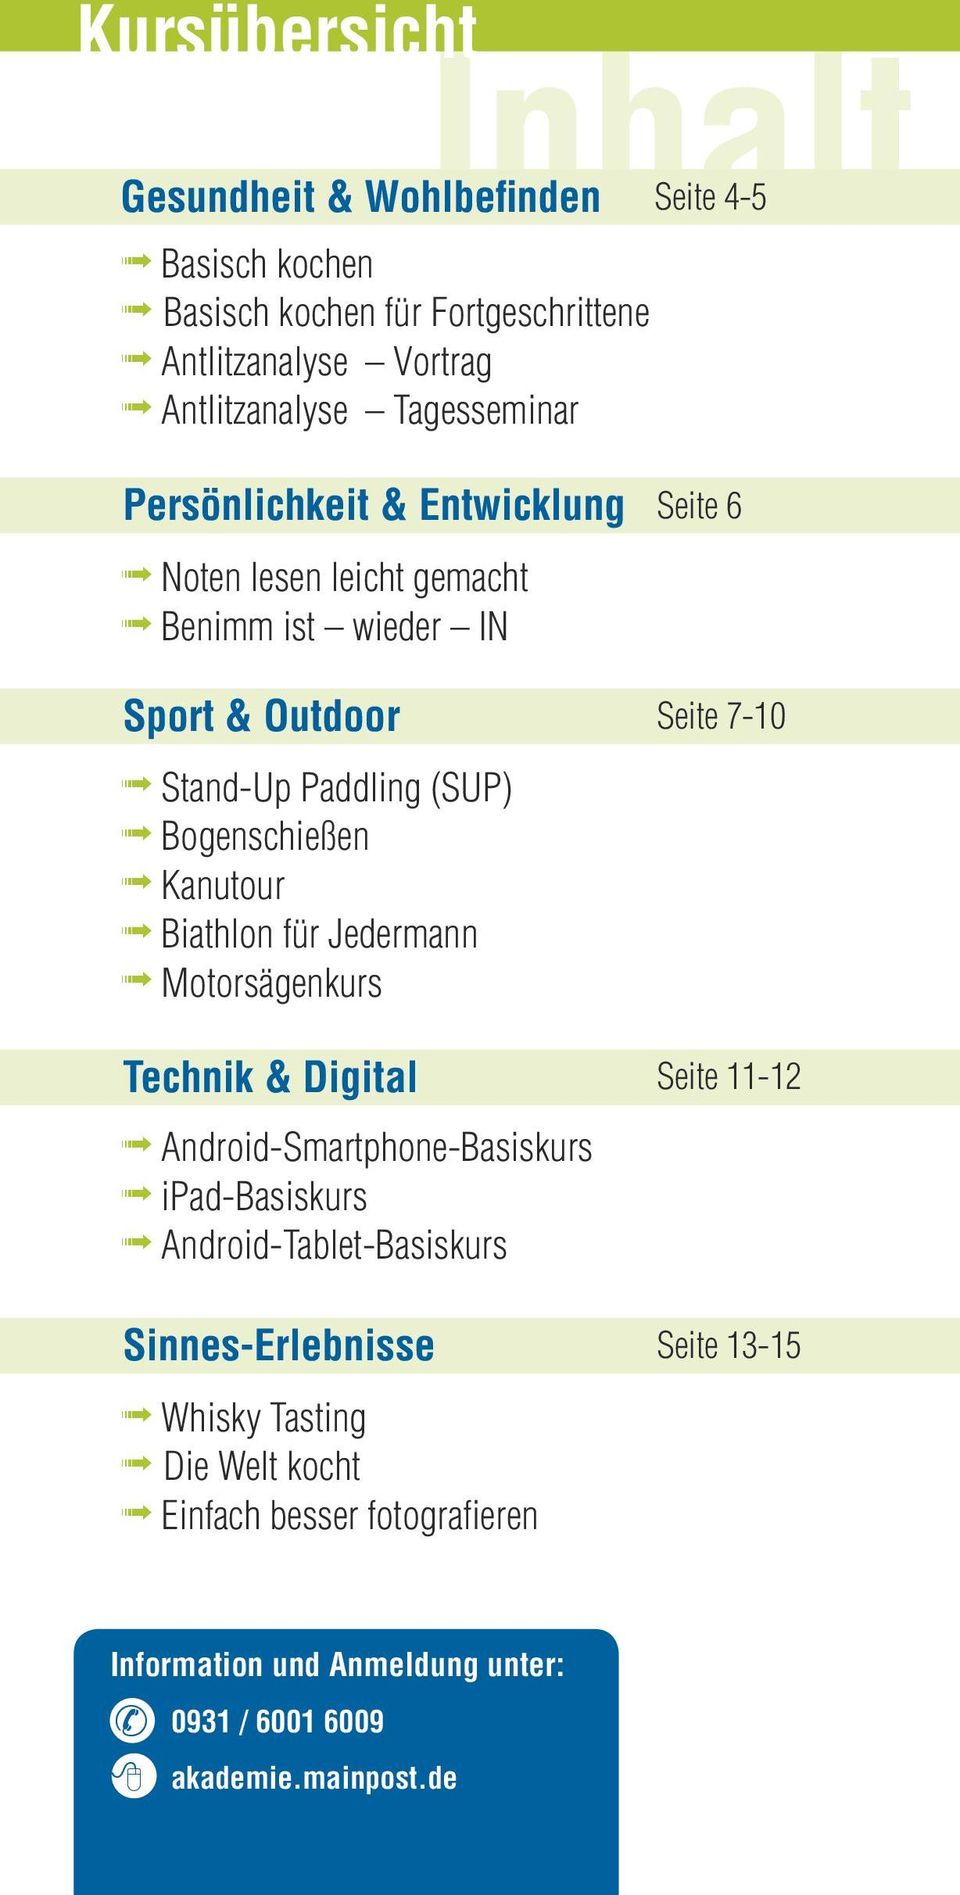 Bogenschießen Kanutour Biathlon für Jedermann Motorsägenkurs Technik & Digital Seite 11-12 Android-Smartphone-Basiskurs ipad-basiskurs